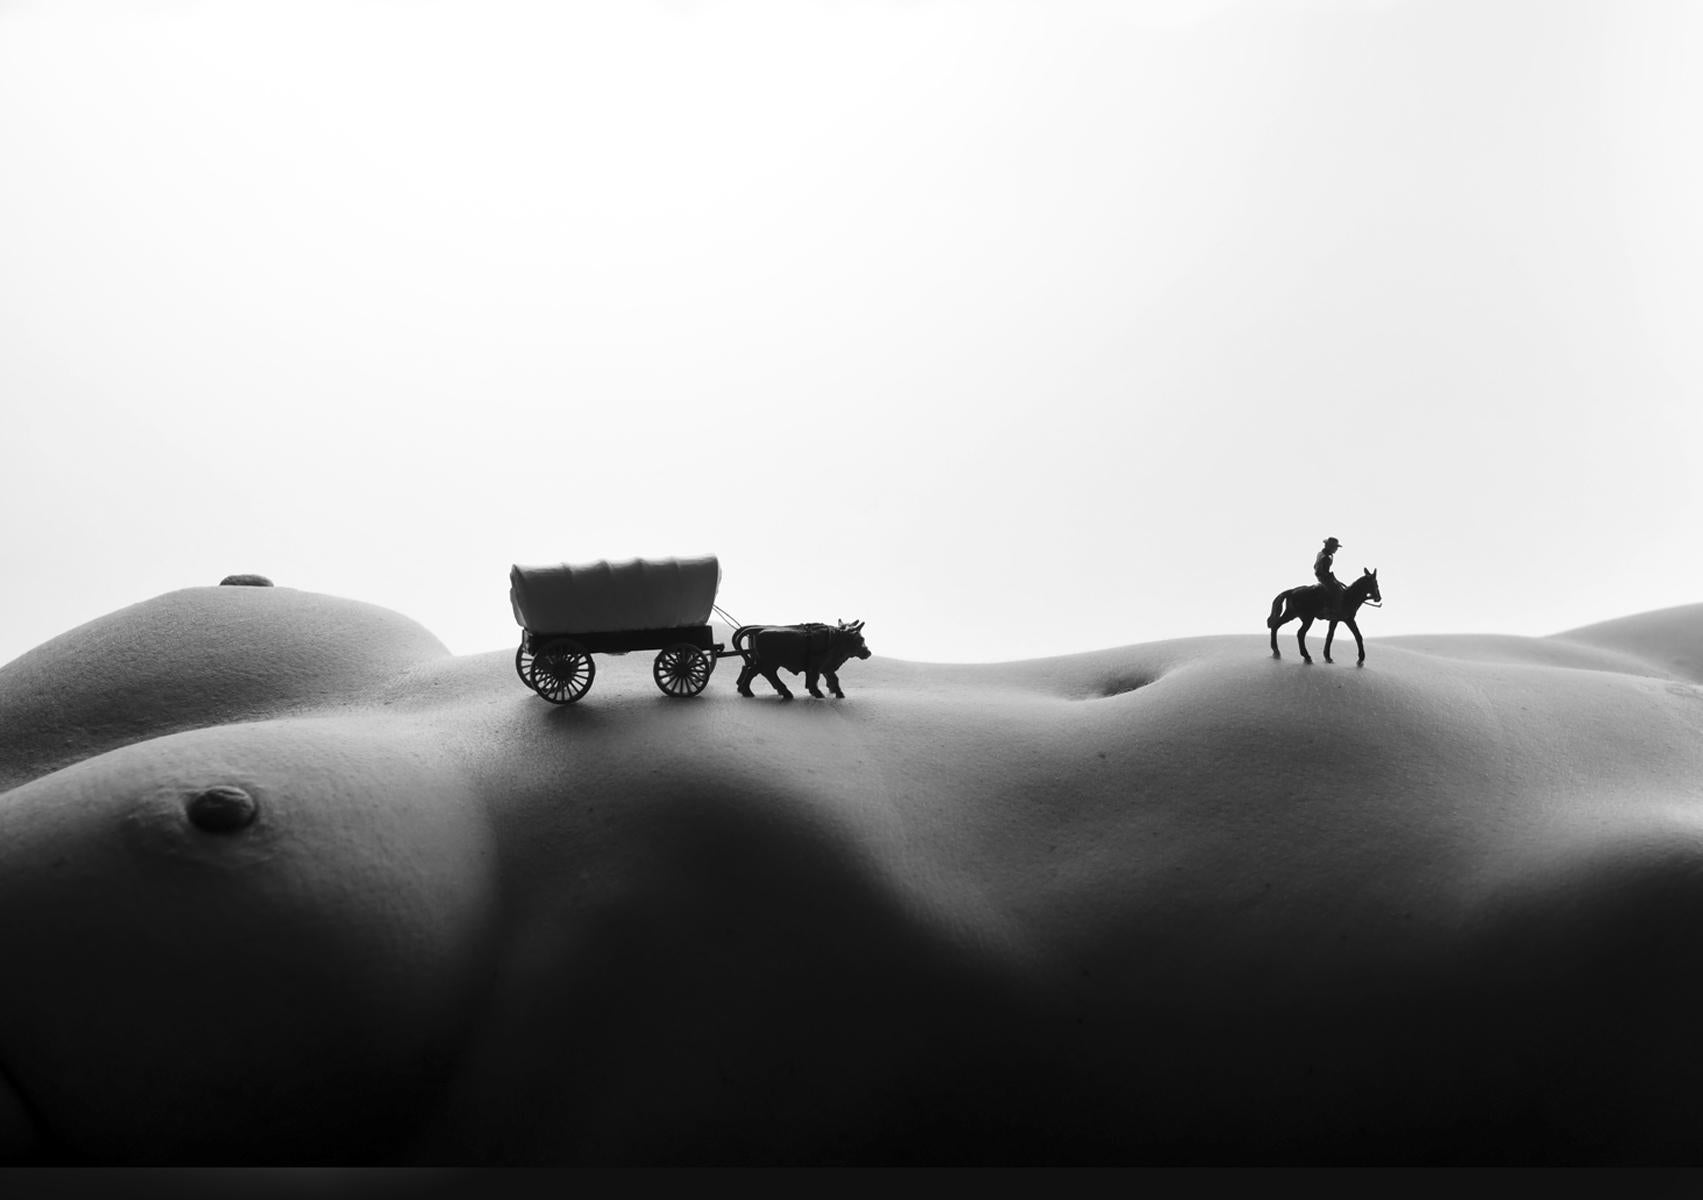 Conastoga wagon - black and white photography